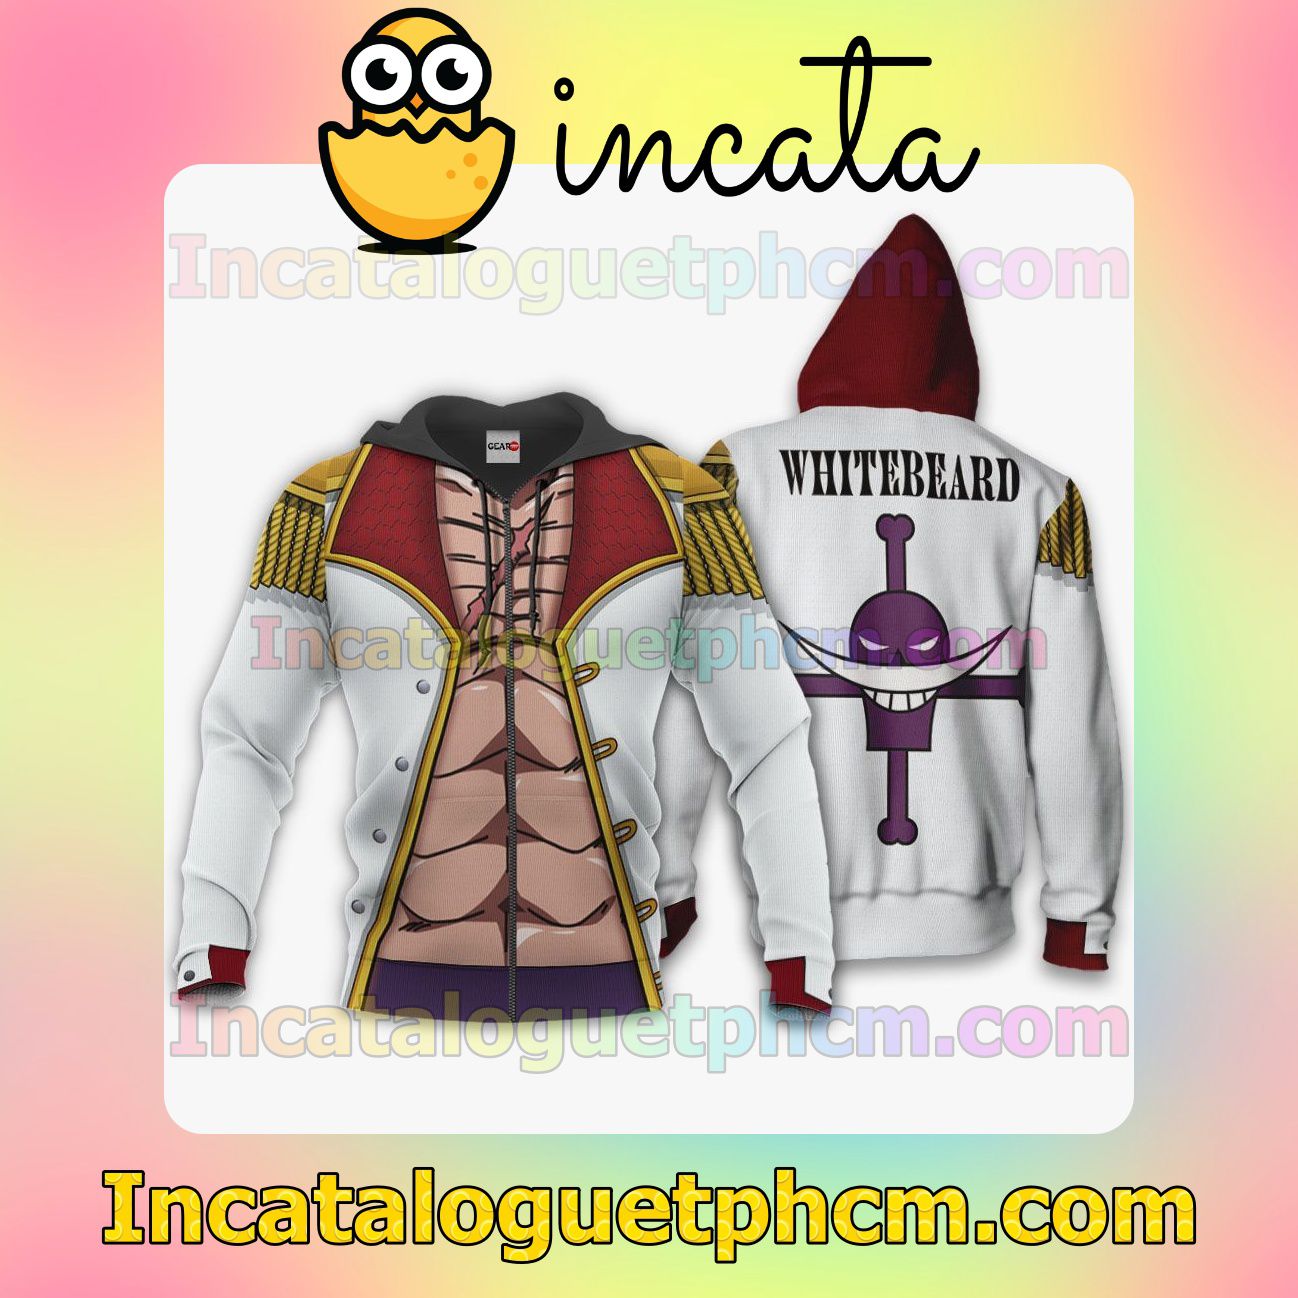 One Piece Whitebeard Uniform Anime Clothing Merch Zip Hoodie Jacket Shirts